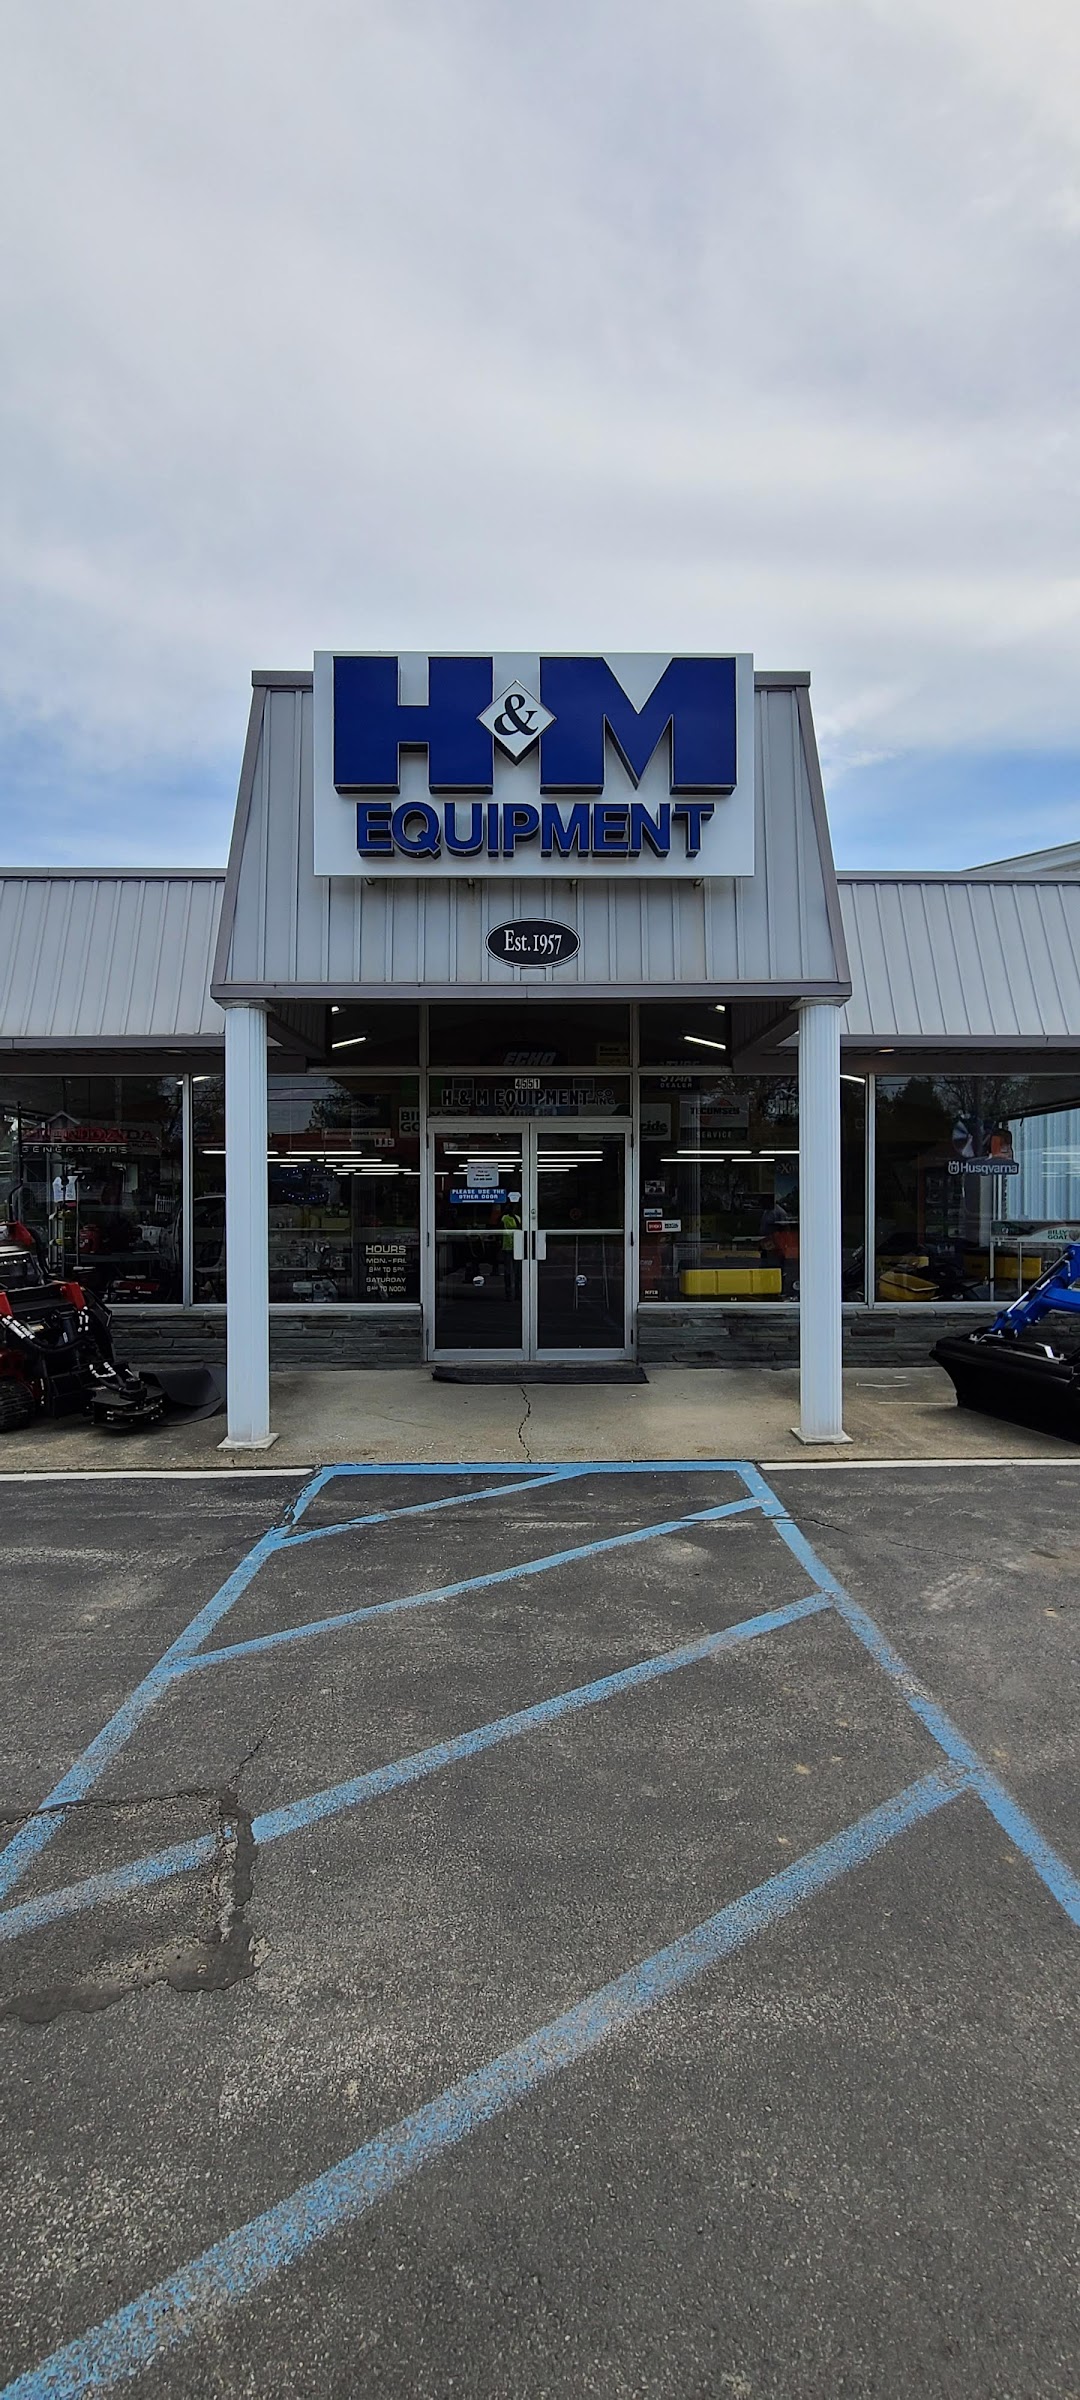 H & M Equipment Co Inc